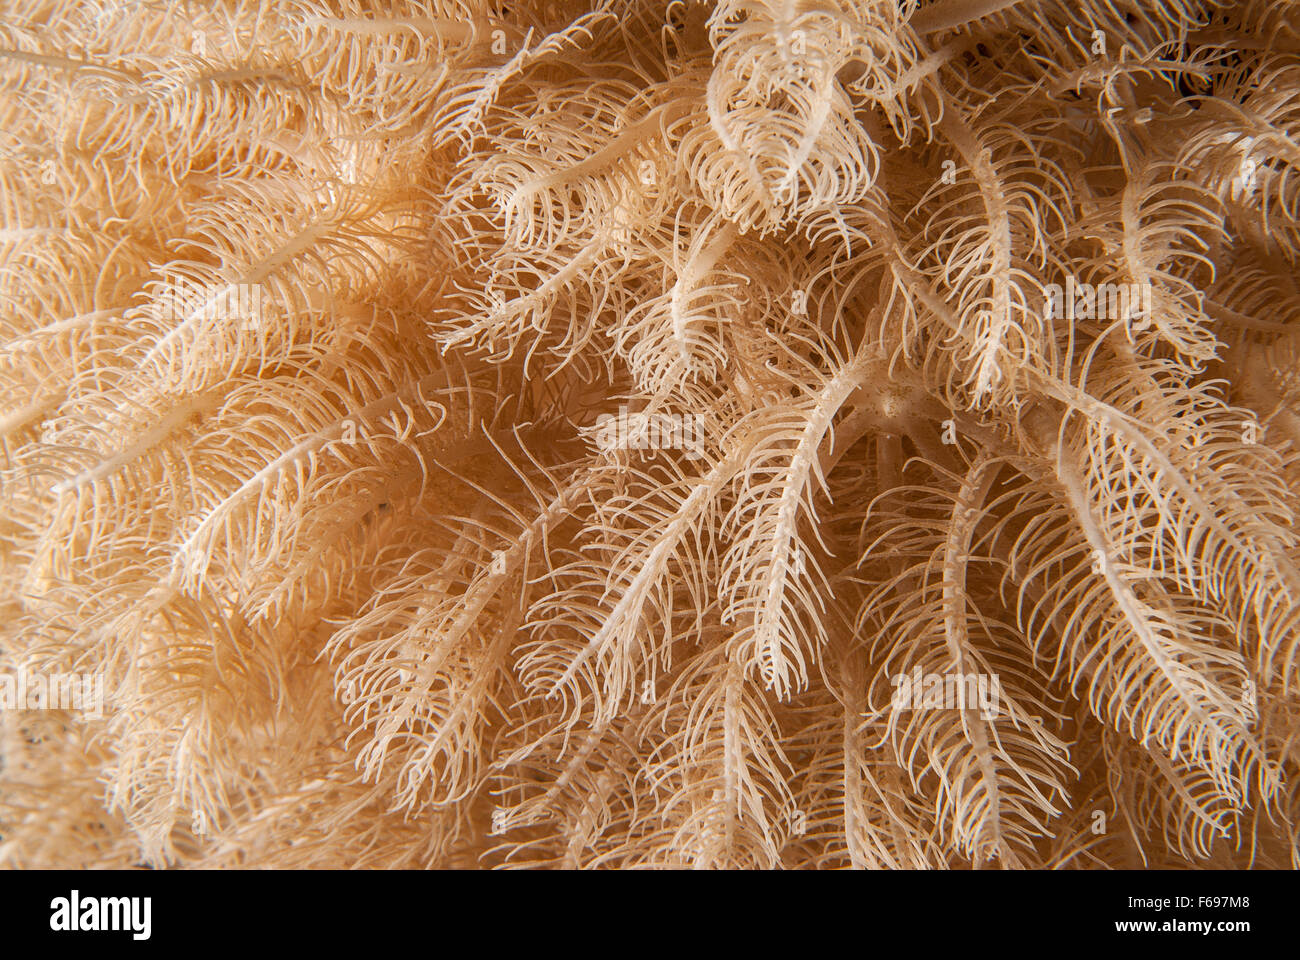 Anthelia sp., Xeriidae,(Octocorallia, Alcyonacea), soft coral, Sharm el- Sheikh, Red Sea, Egypt Stock Photo